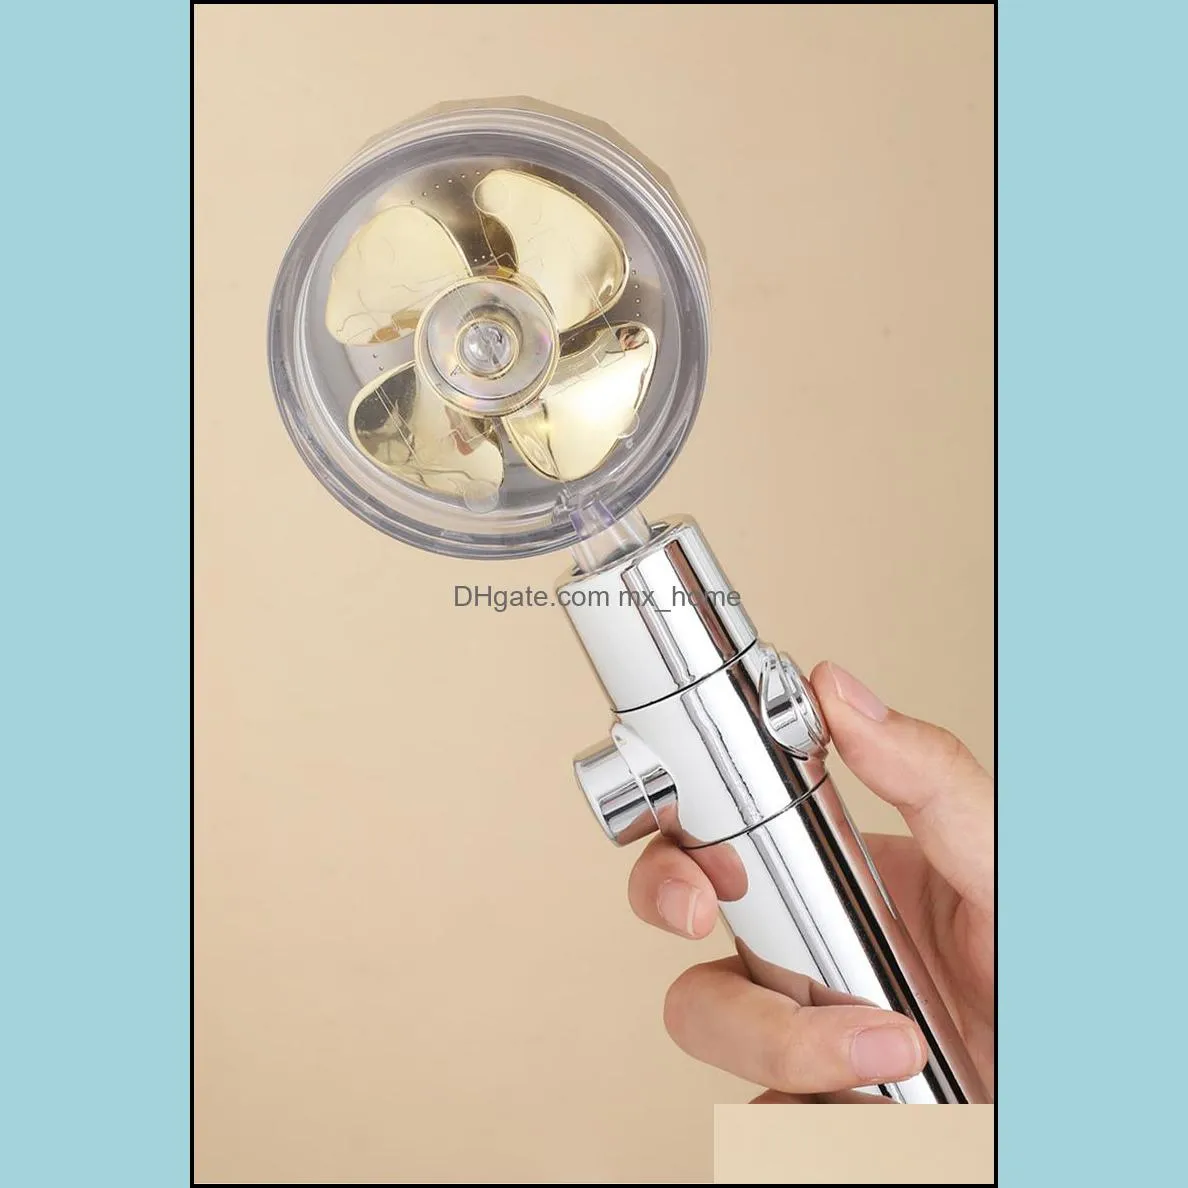 Pressurized Bathroom Shower Golden High Pressure Heads Sprinkler Hotel Home Supplies wholesale